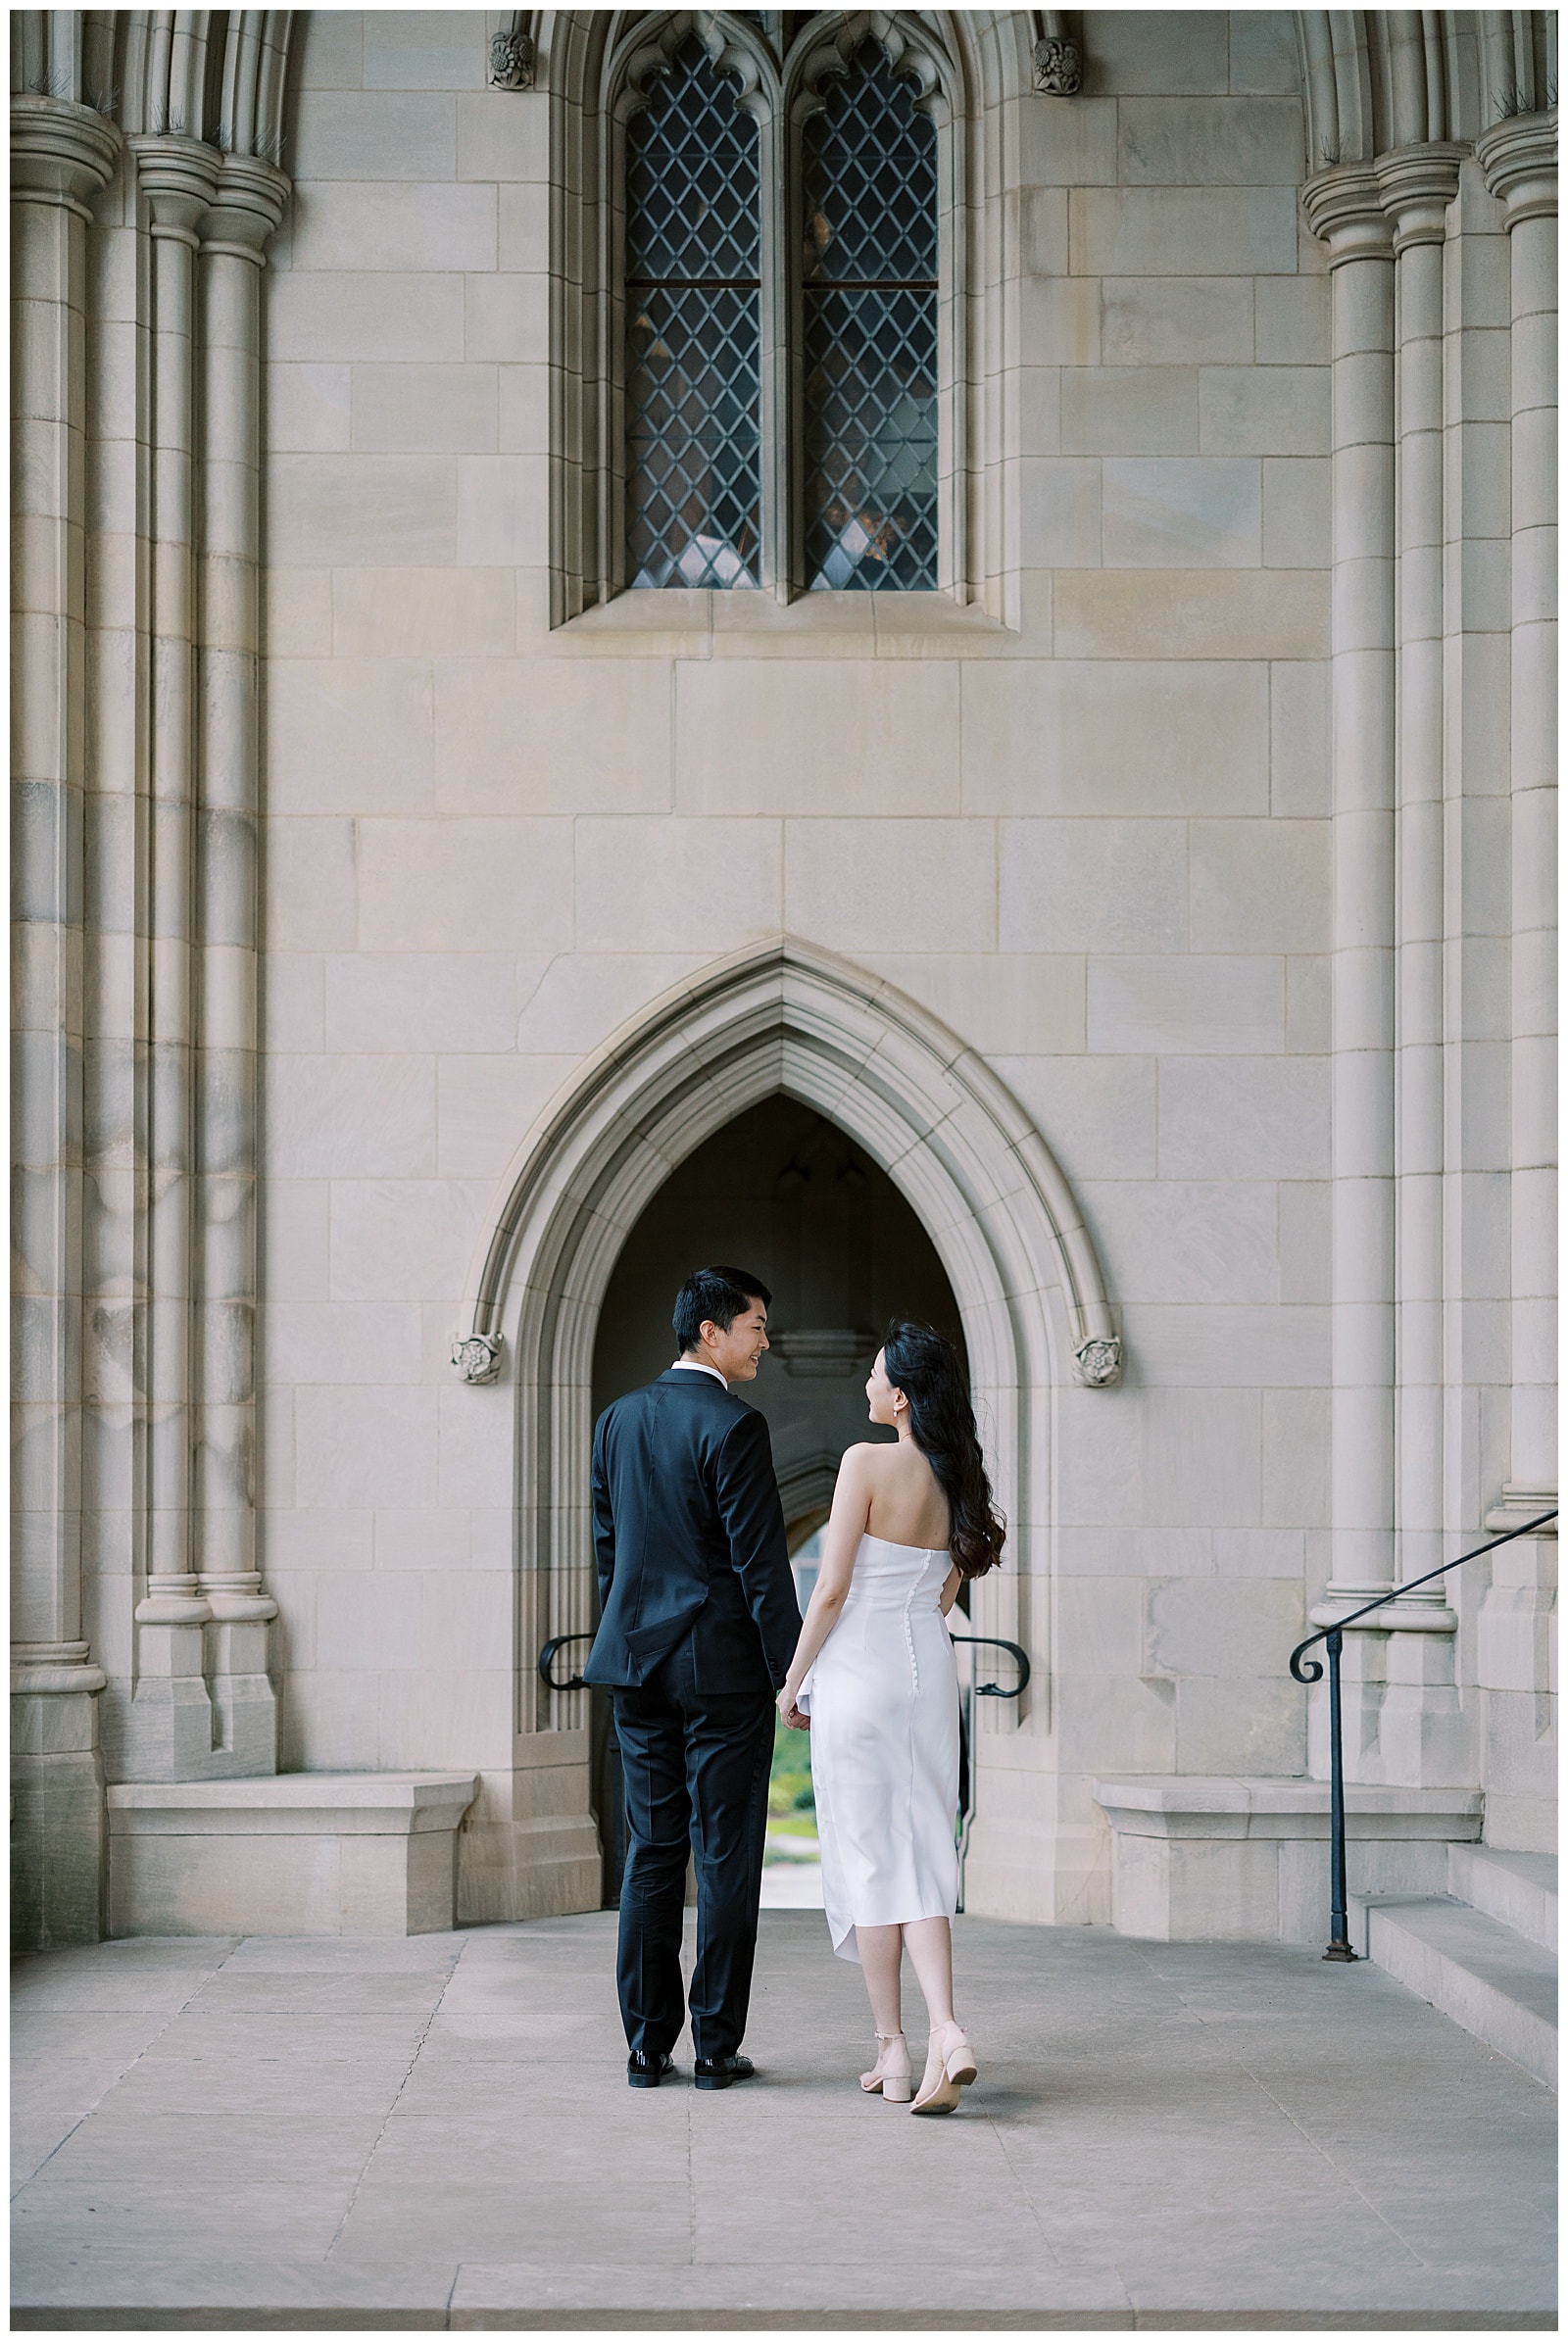 Danielle-Defayette-Photography-Washington-National-Cathedral-Engagement-Photos_0006.jpg